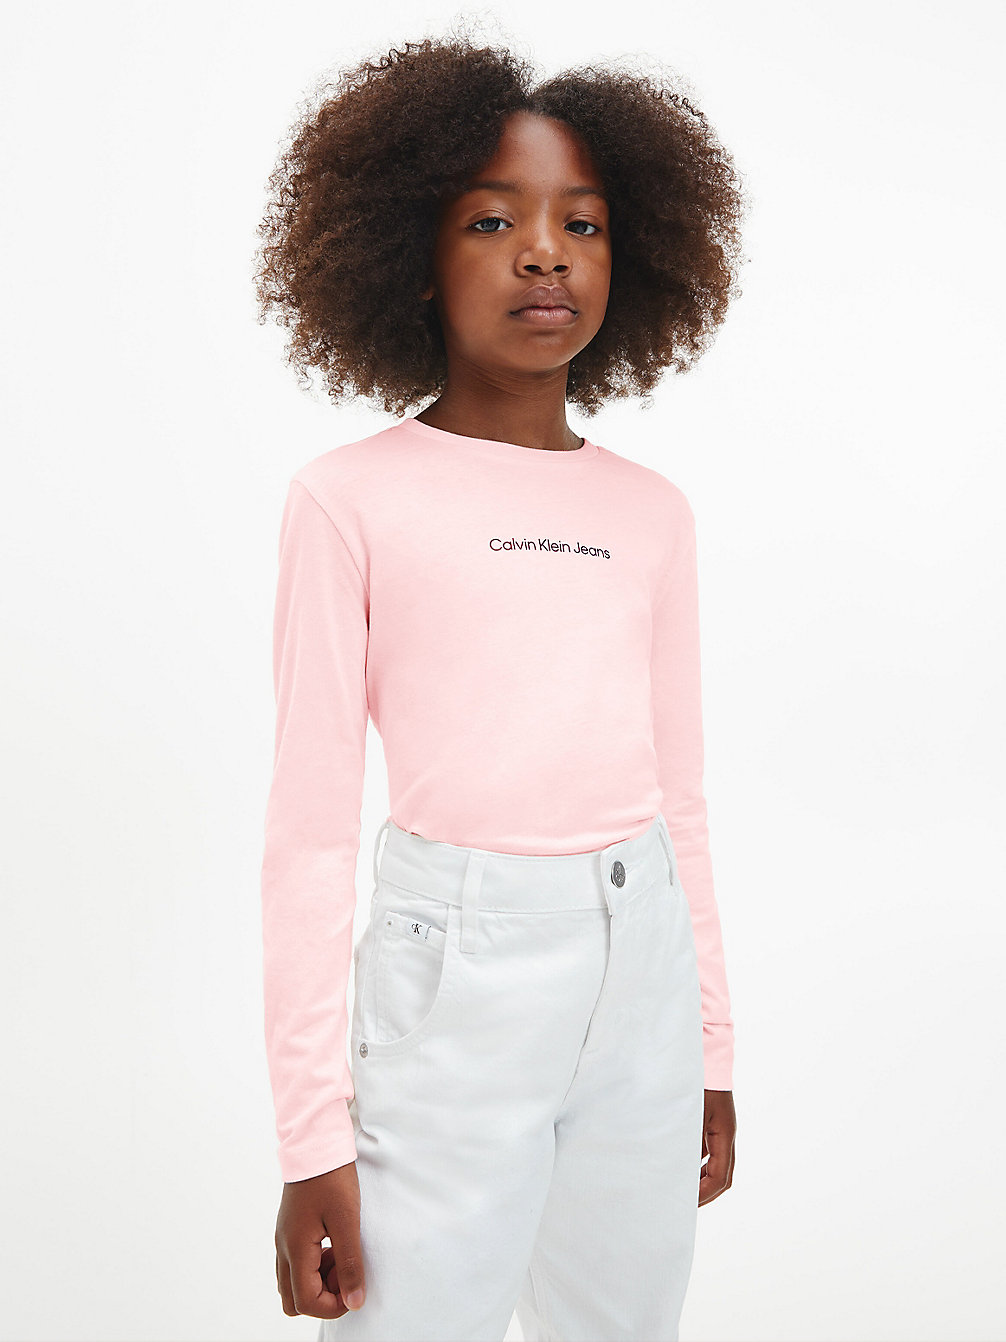 CREOLE PINK Organic Cotton Long Sleeve T-Shirt undefined girls Calvin Klein